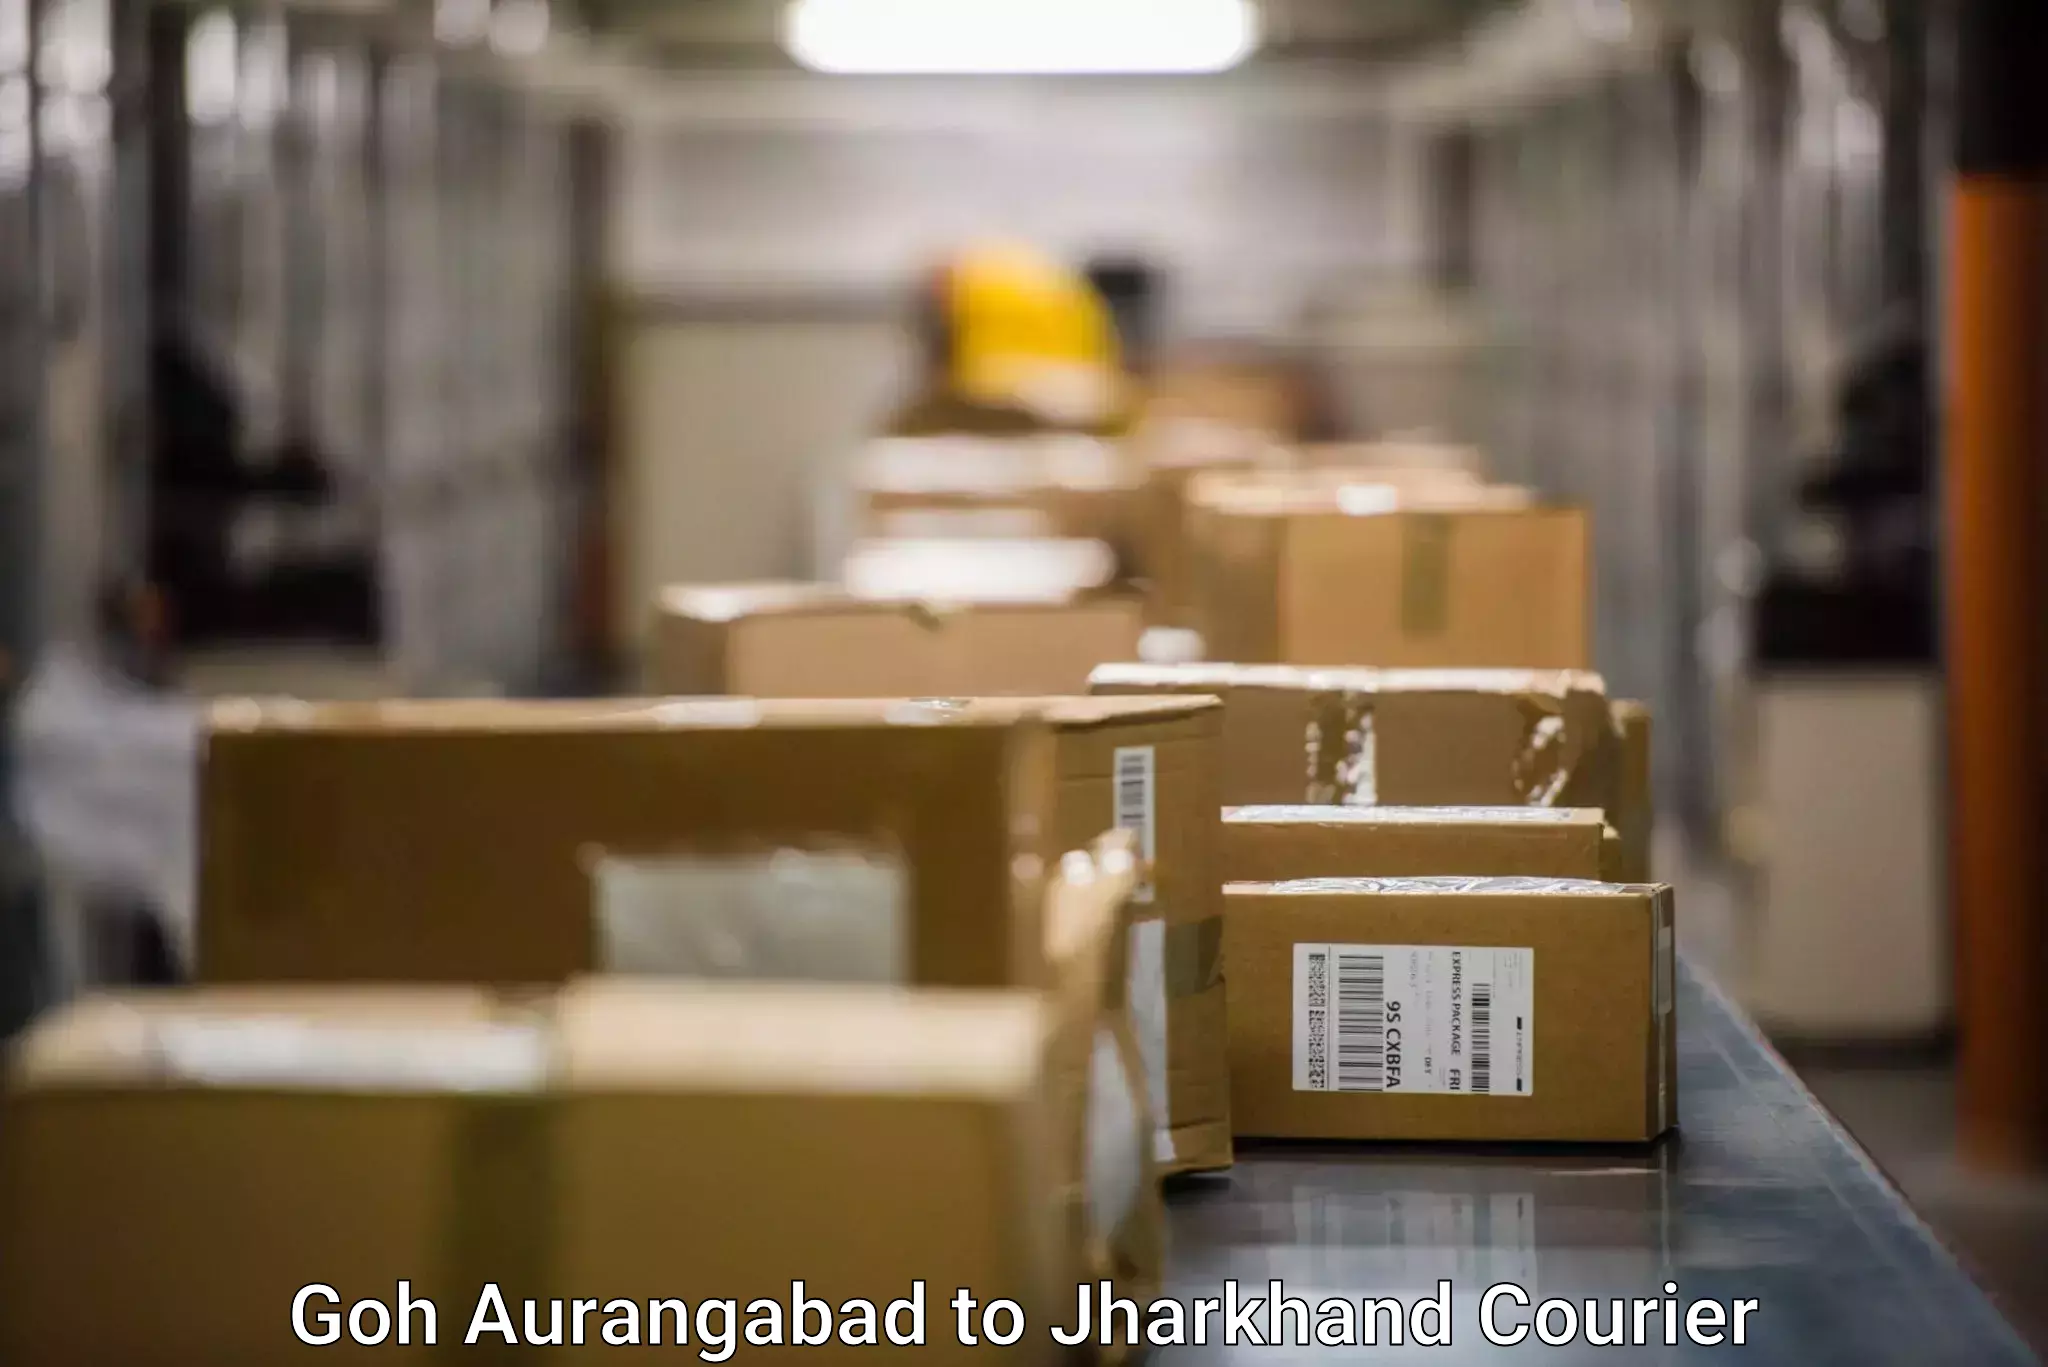 High-speed parcel service Goh Aurangabad to Poreyahat